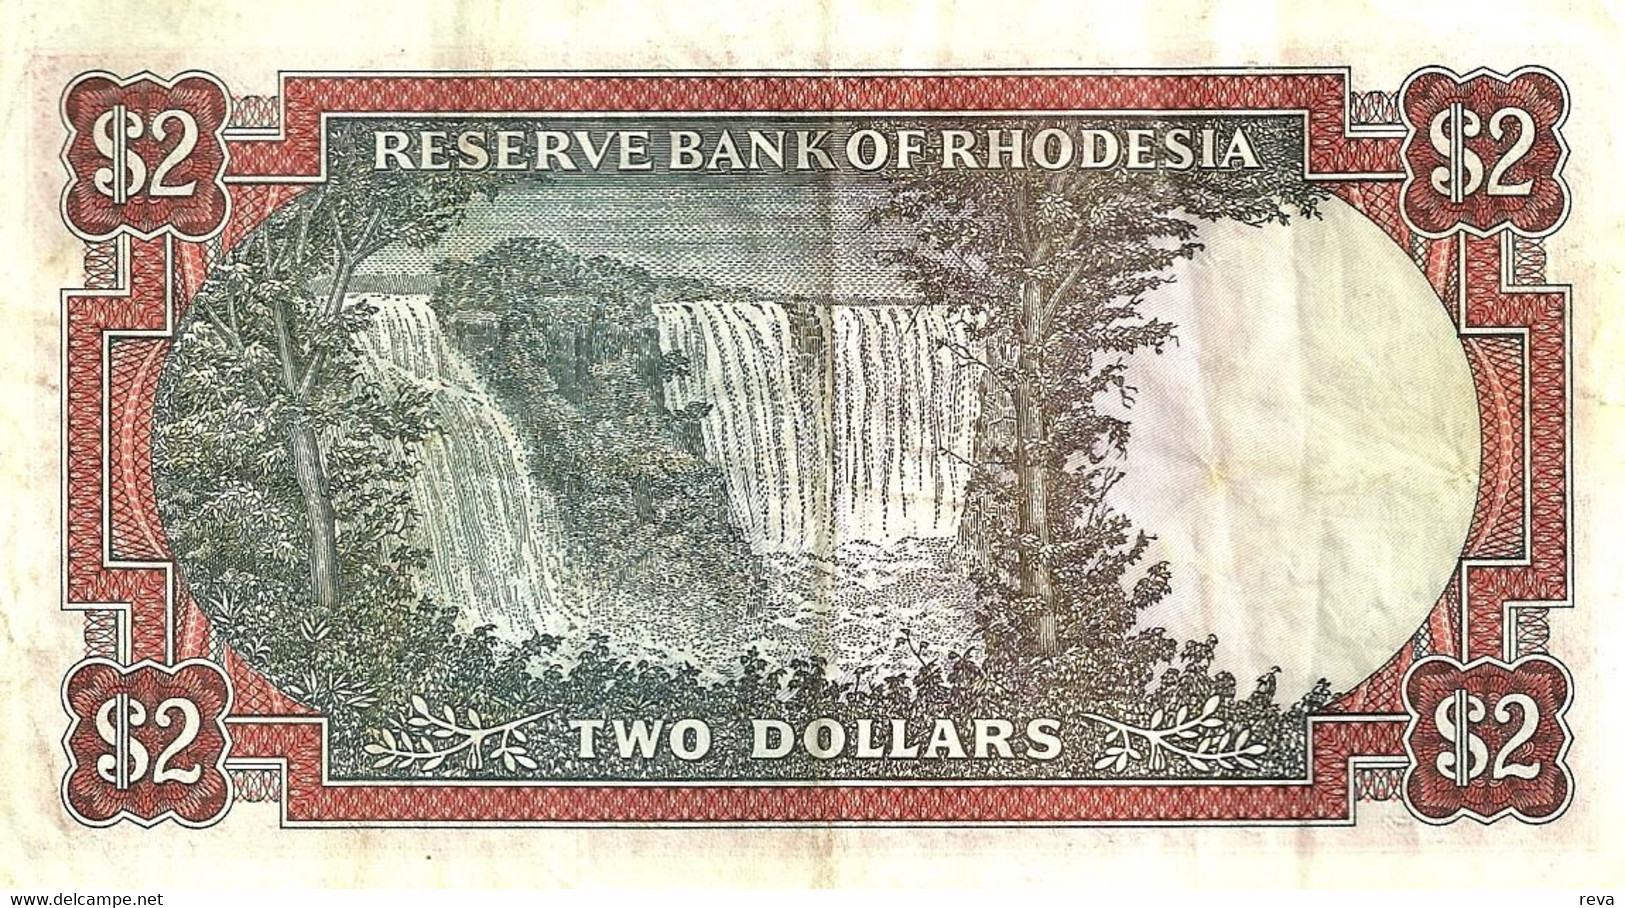 RHODESIA $2 RED EMBLEM FRONT WATERFALL BACK DATED 24-05-1979 P.31b VF+ READ DESCRIPTION!! - Rhodesië